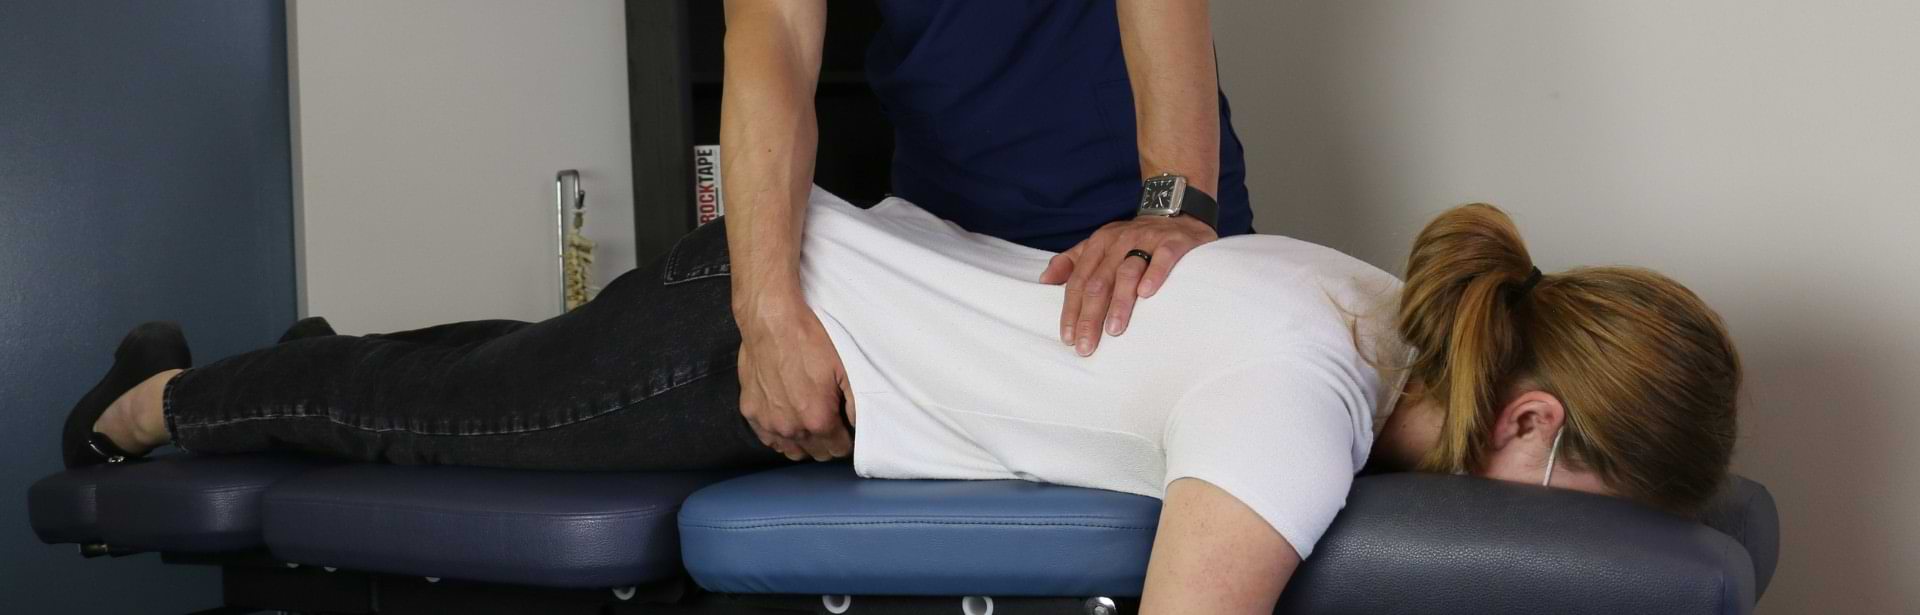 Chiropractic | Spinal Evaluation & Adjustments Explaining | Dundas University Health Clinic